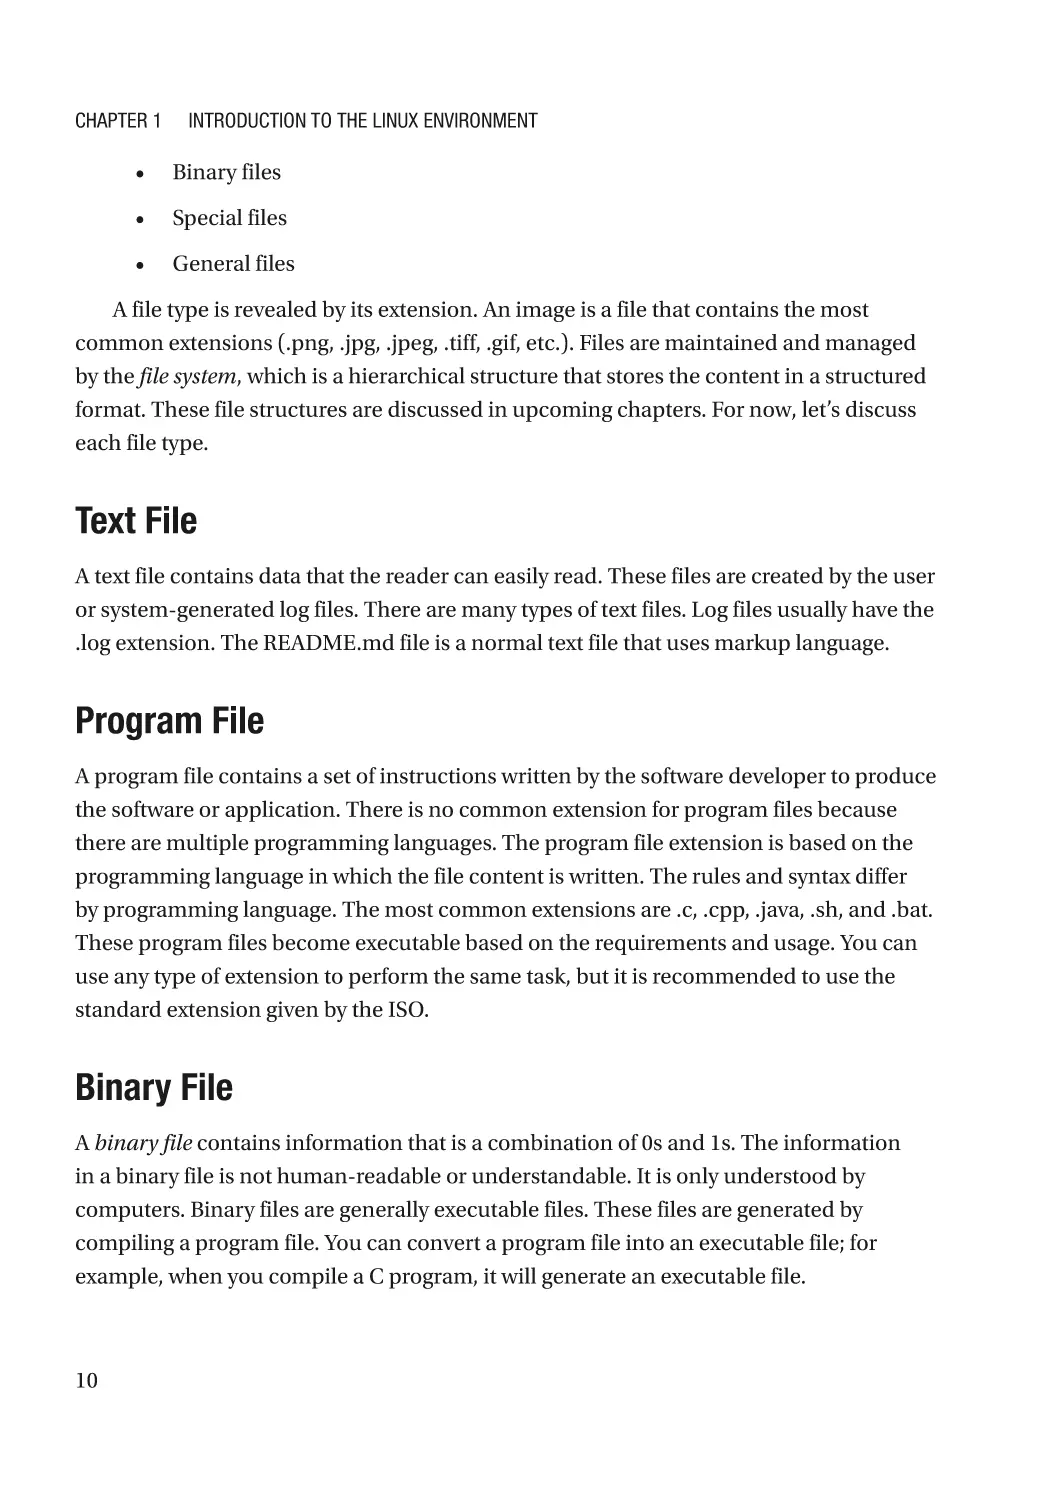 Text File
Program File
Binary File